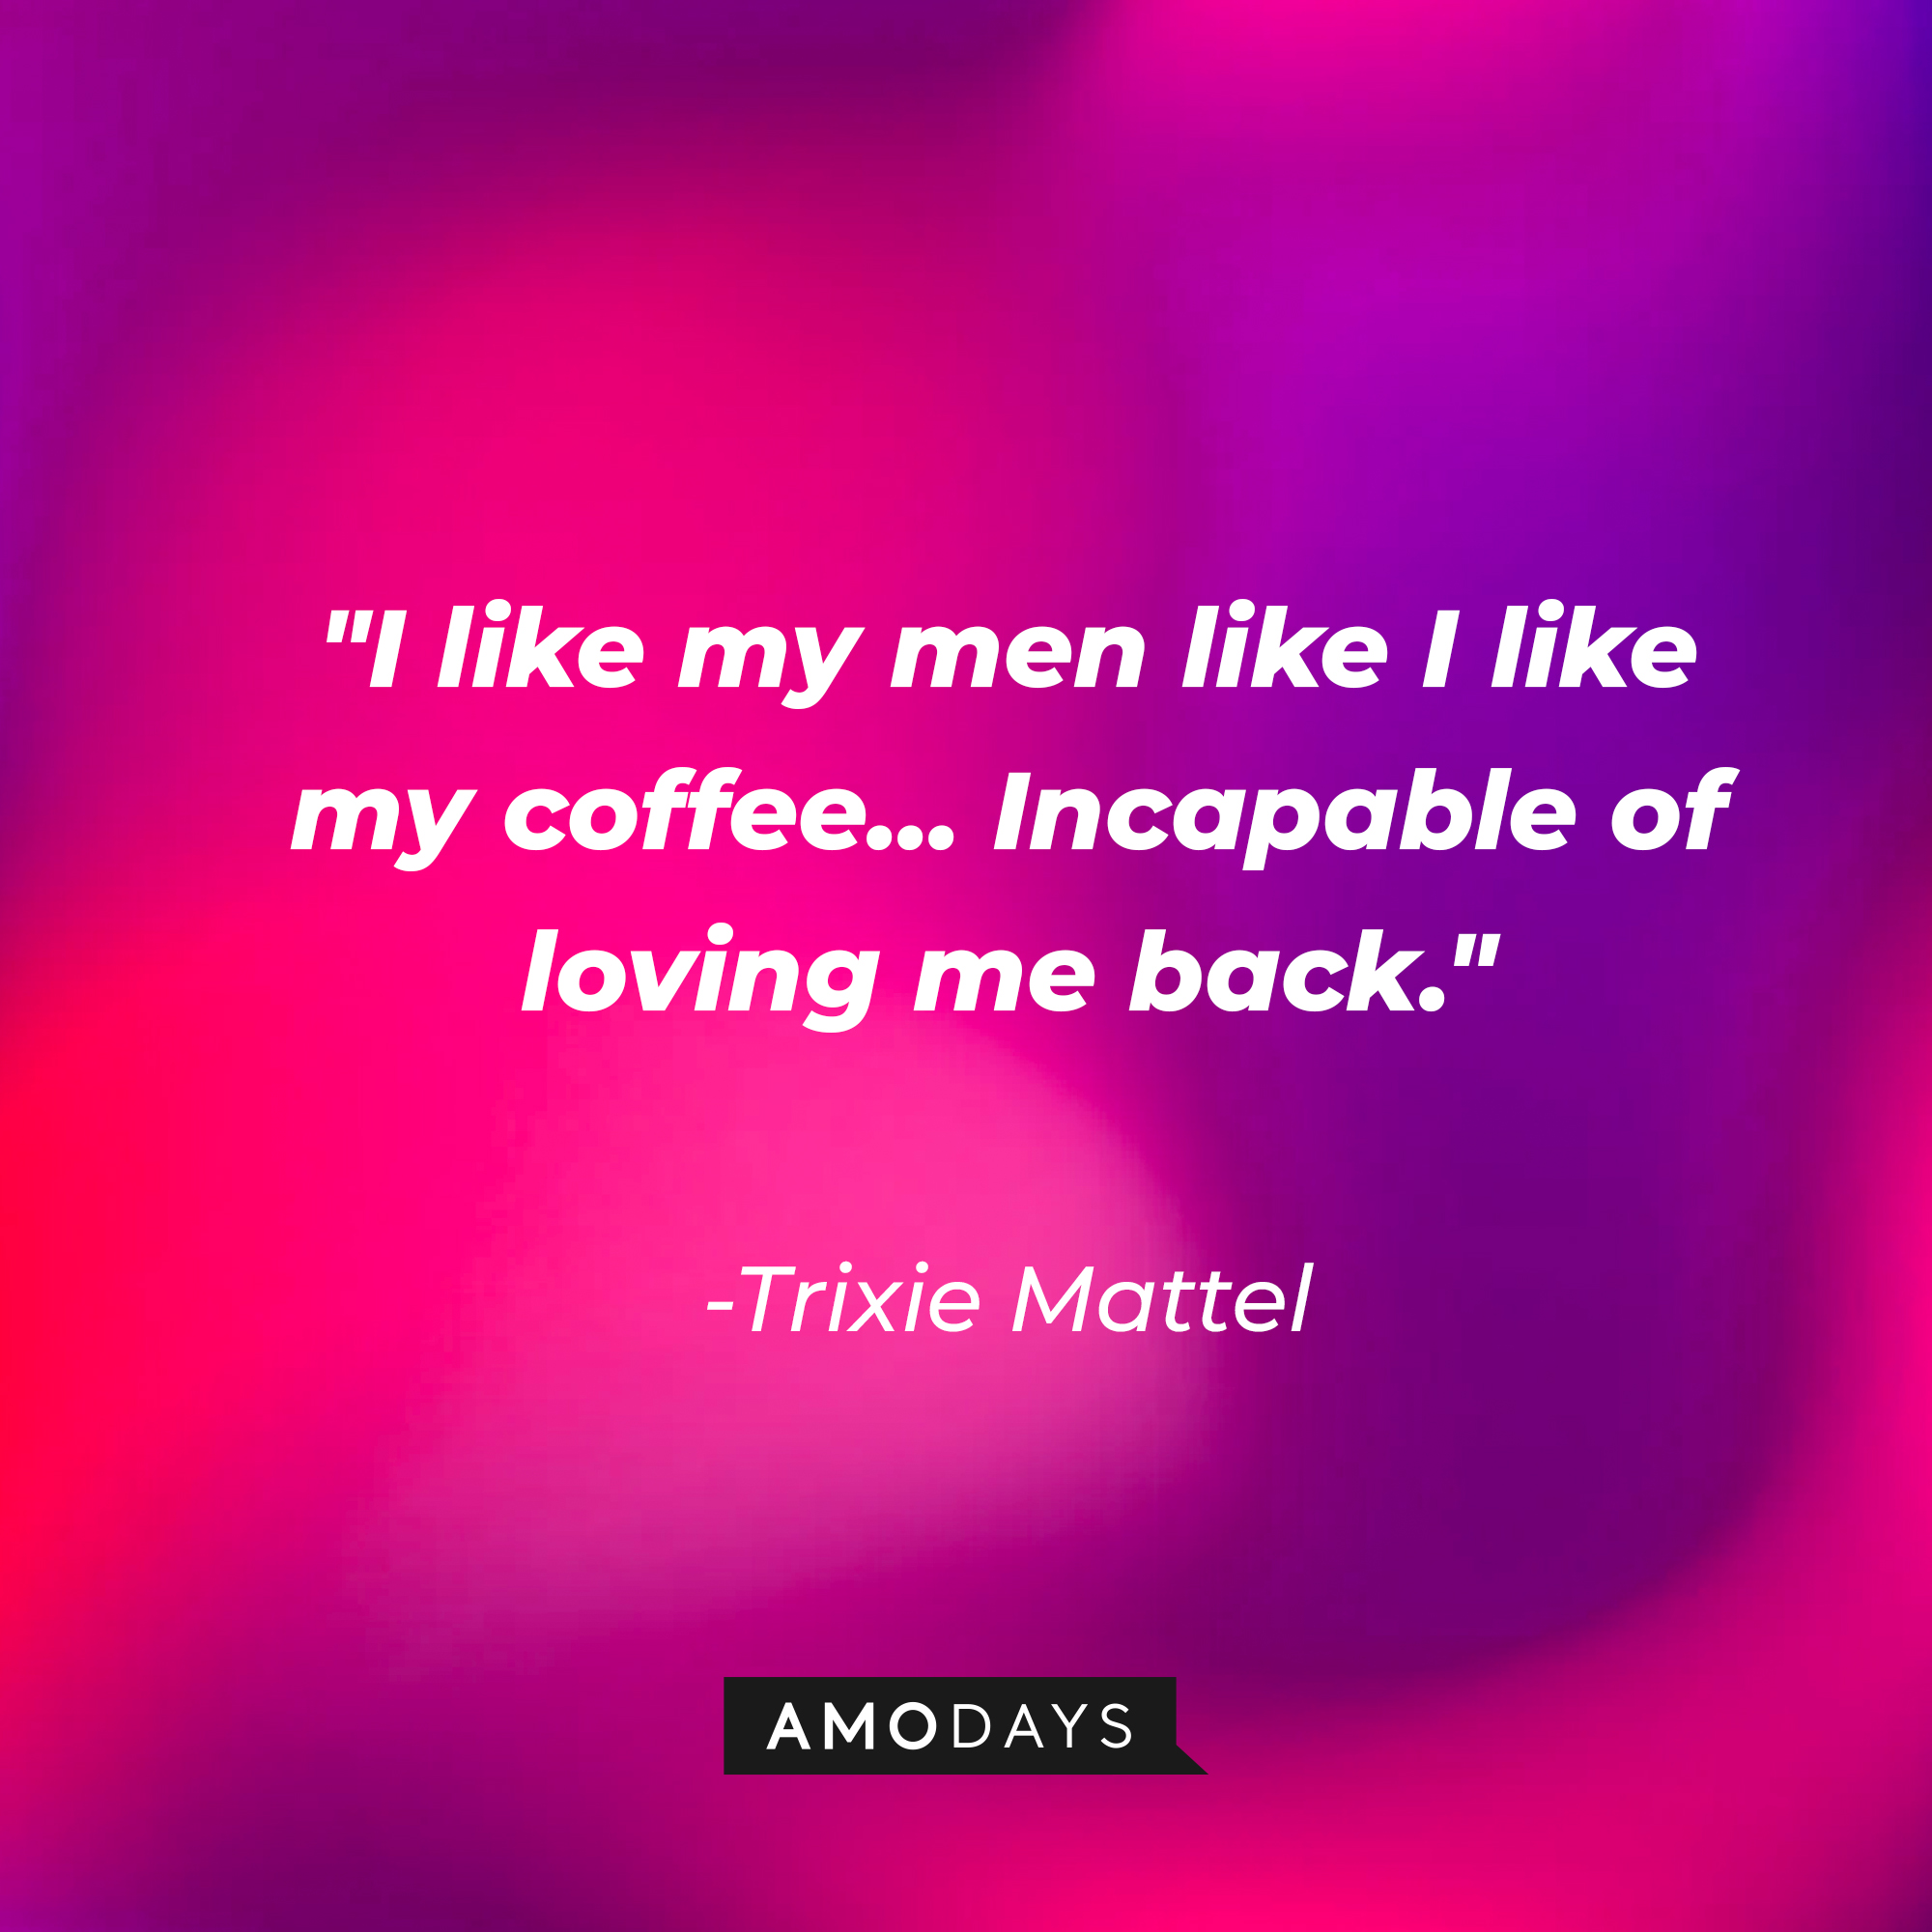 Trixie Mattel's quote: "I like my men like I like my coffee... Incapable of loving me back." | Source: AmoDays